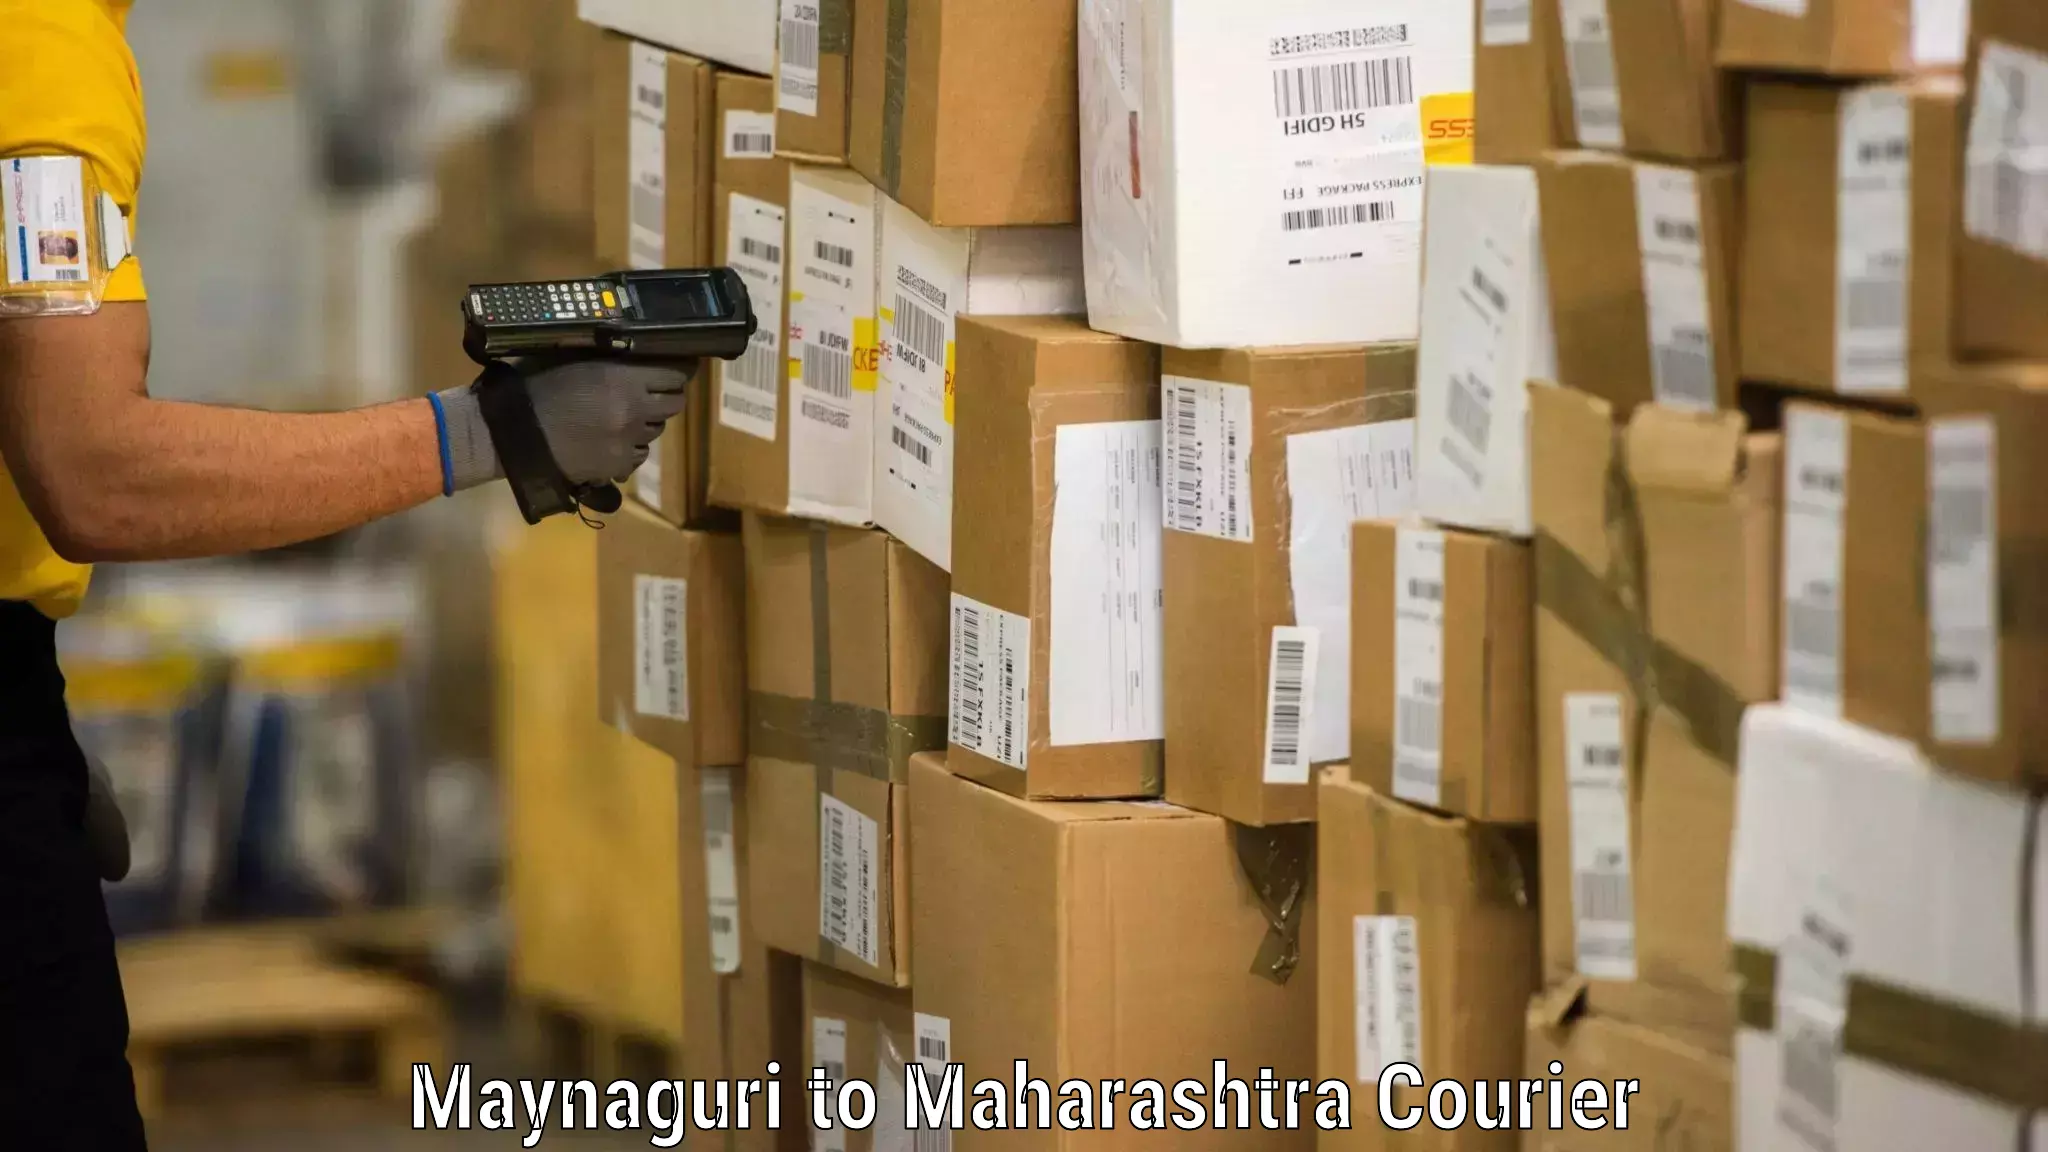 Furniture transport service Maynaguri to Maharashtra